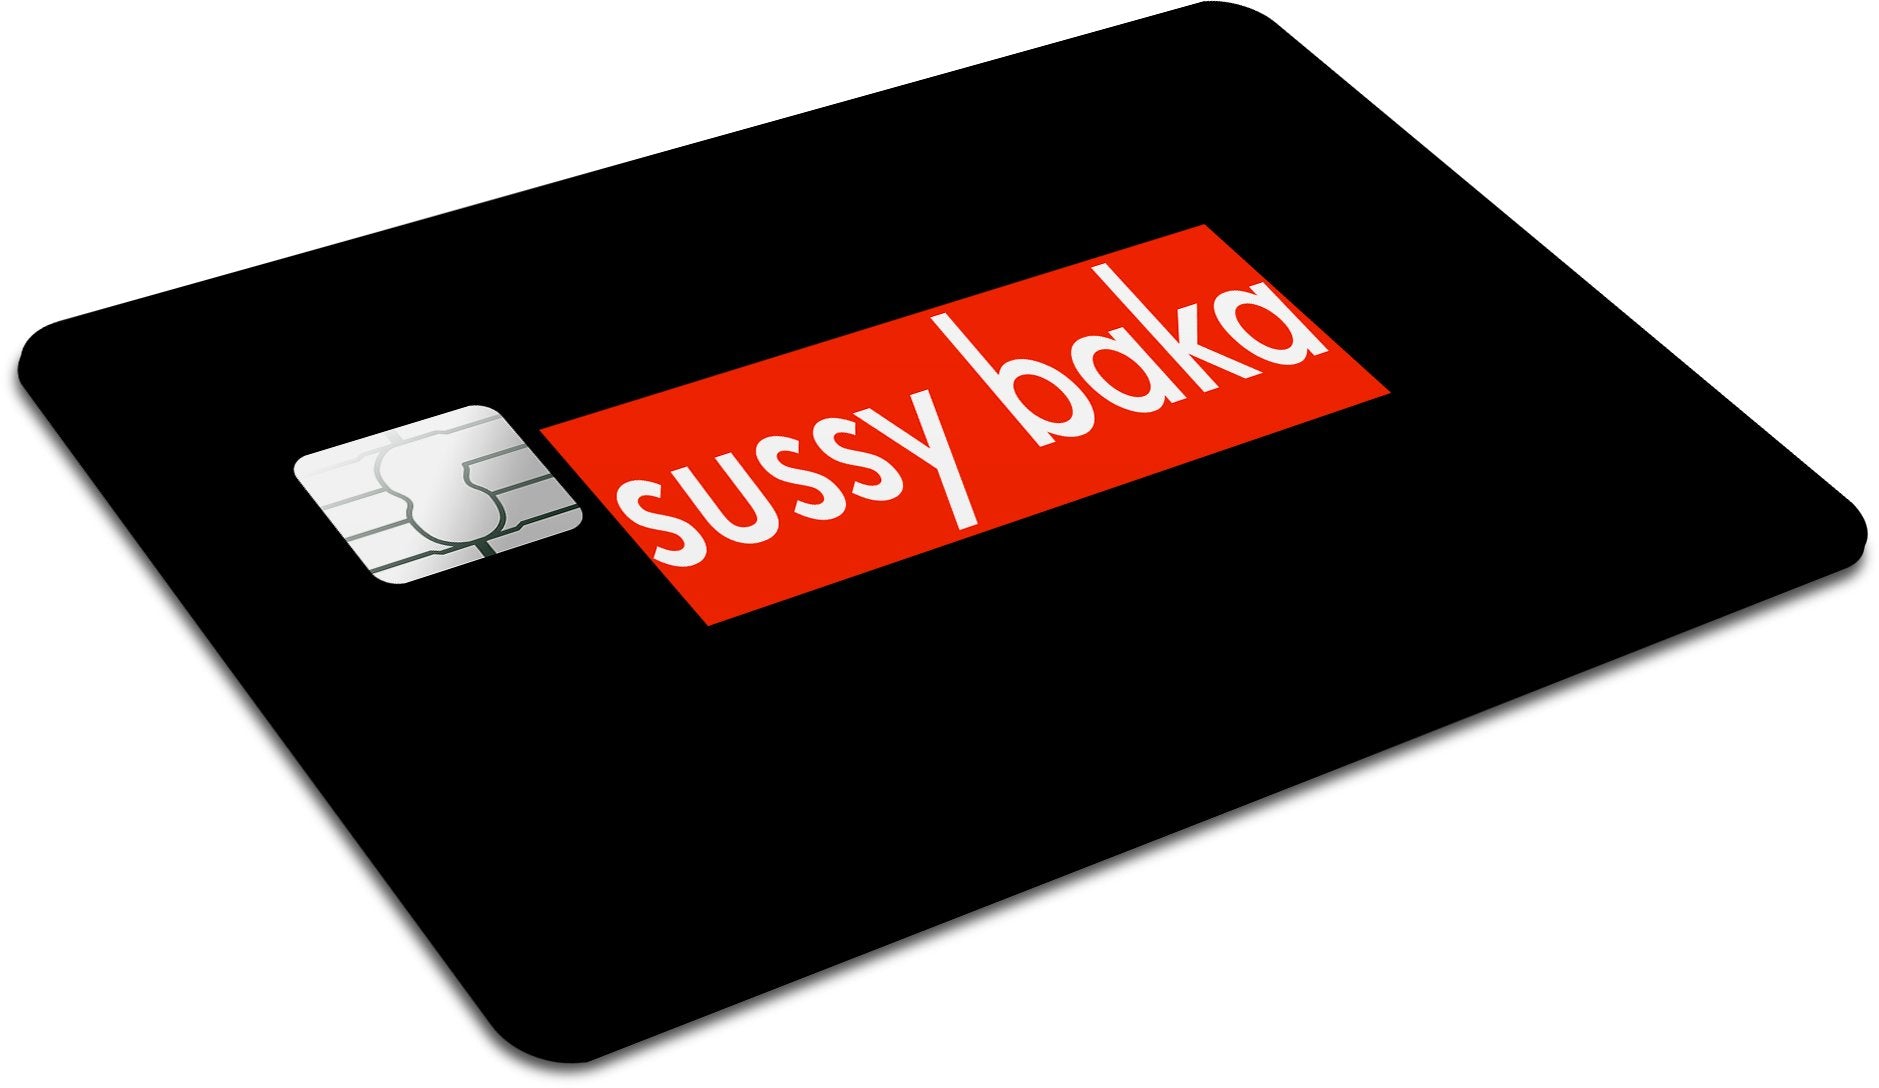 Sussy Baka | Greeting Card